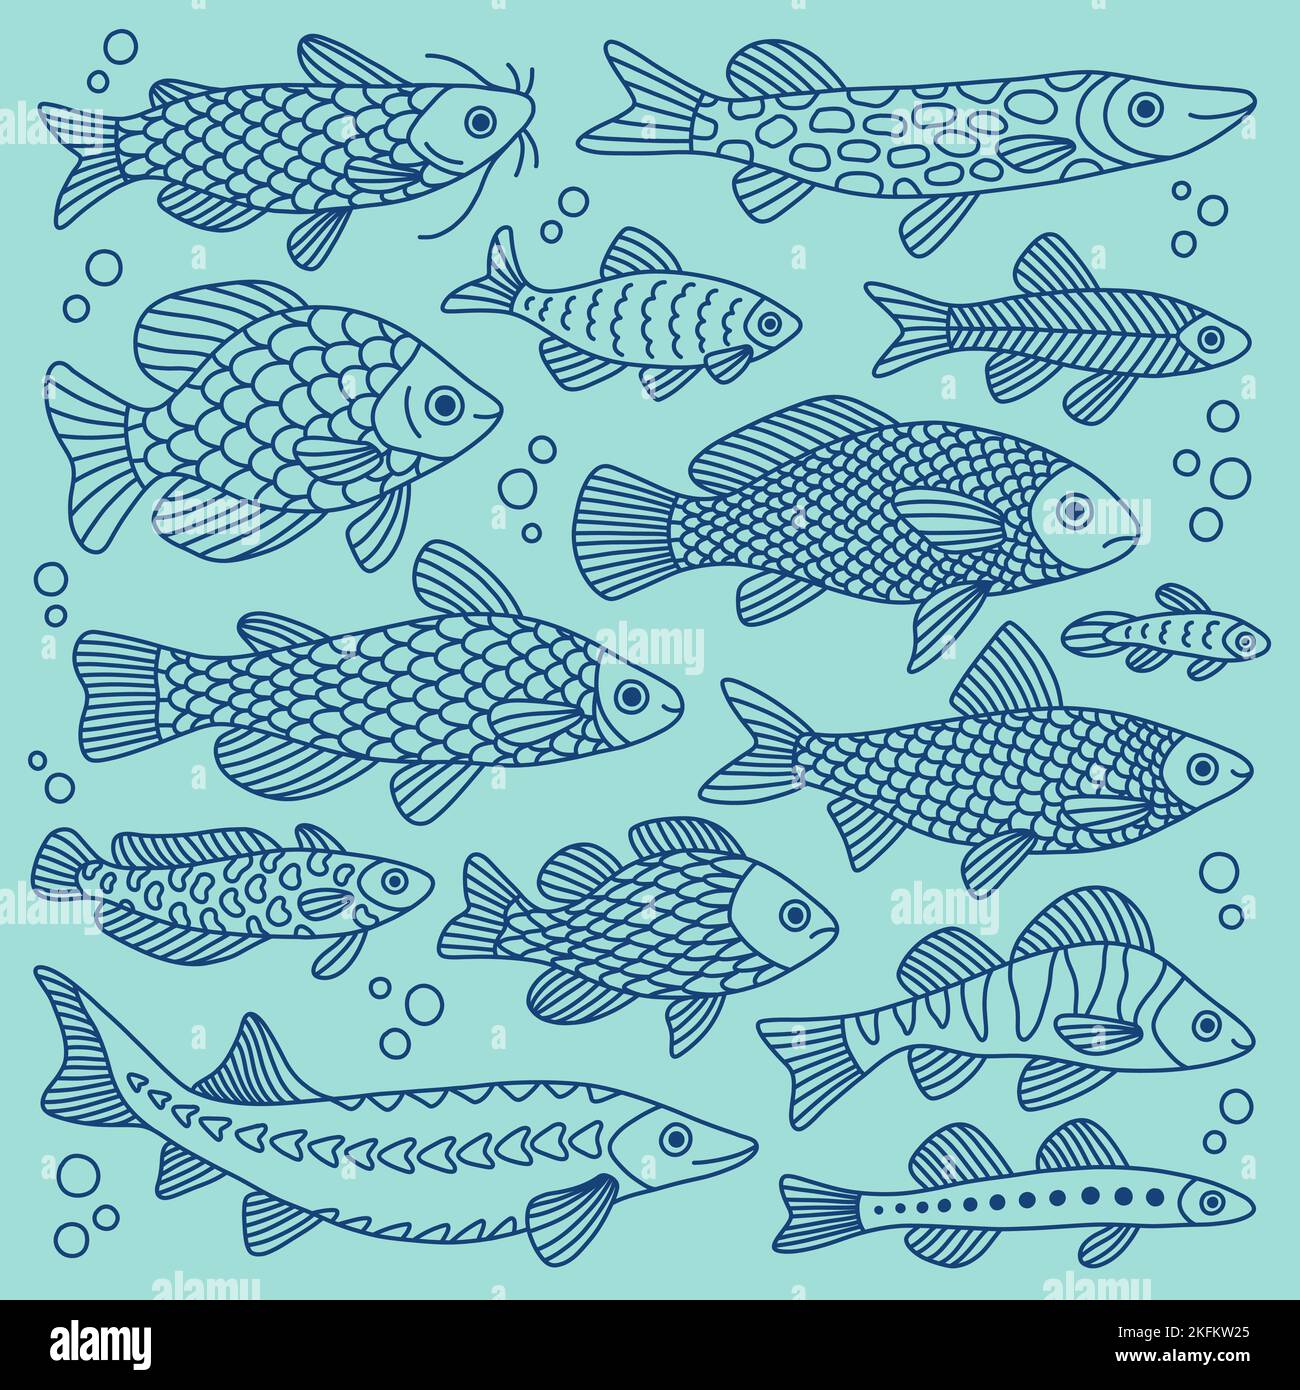 Vector Doodle Satz von Fischen in verschiedenen Formen mit verschiedenen handgezeichneten Mustern, isoliert. Meerestiere, Meer, Reisen. Stock Vektor